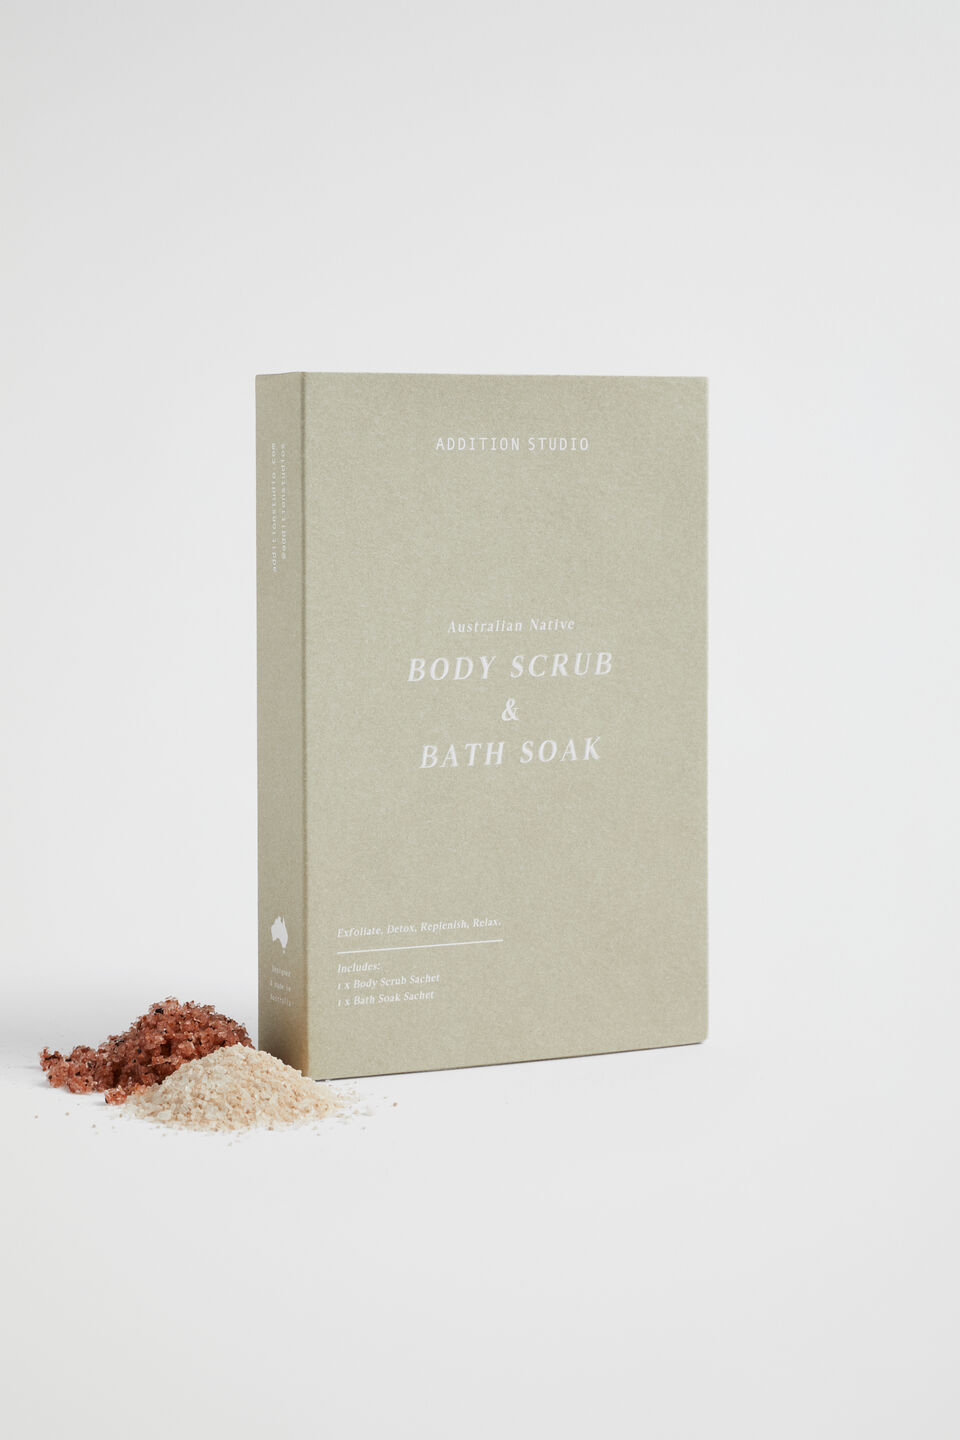 Addition Studio Body Scrub and Bath Soak  Australian Native